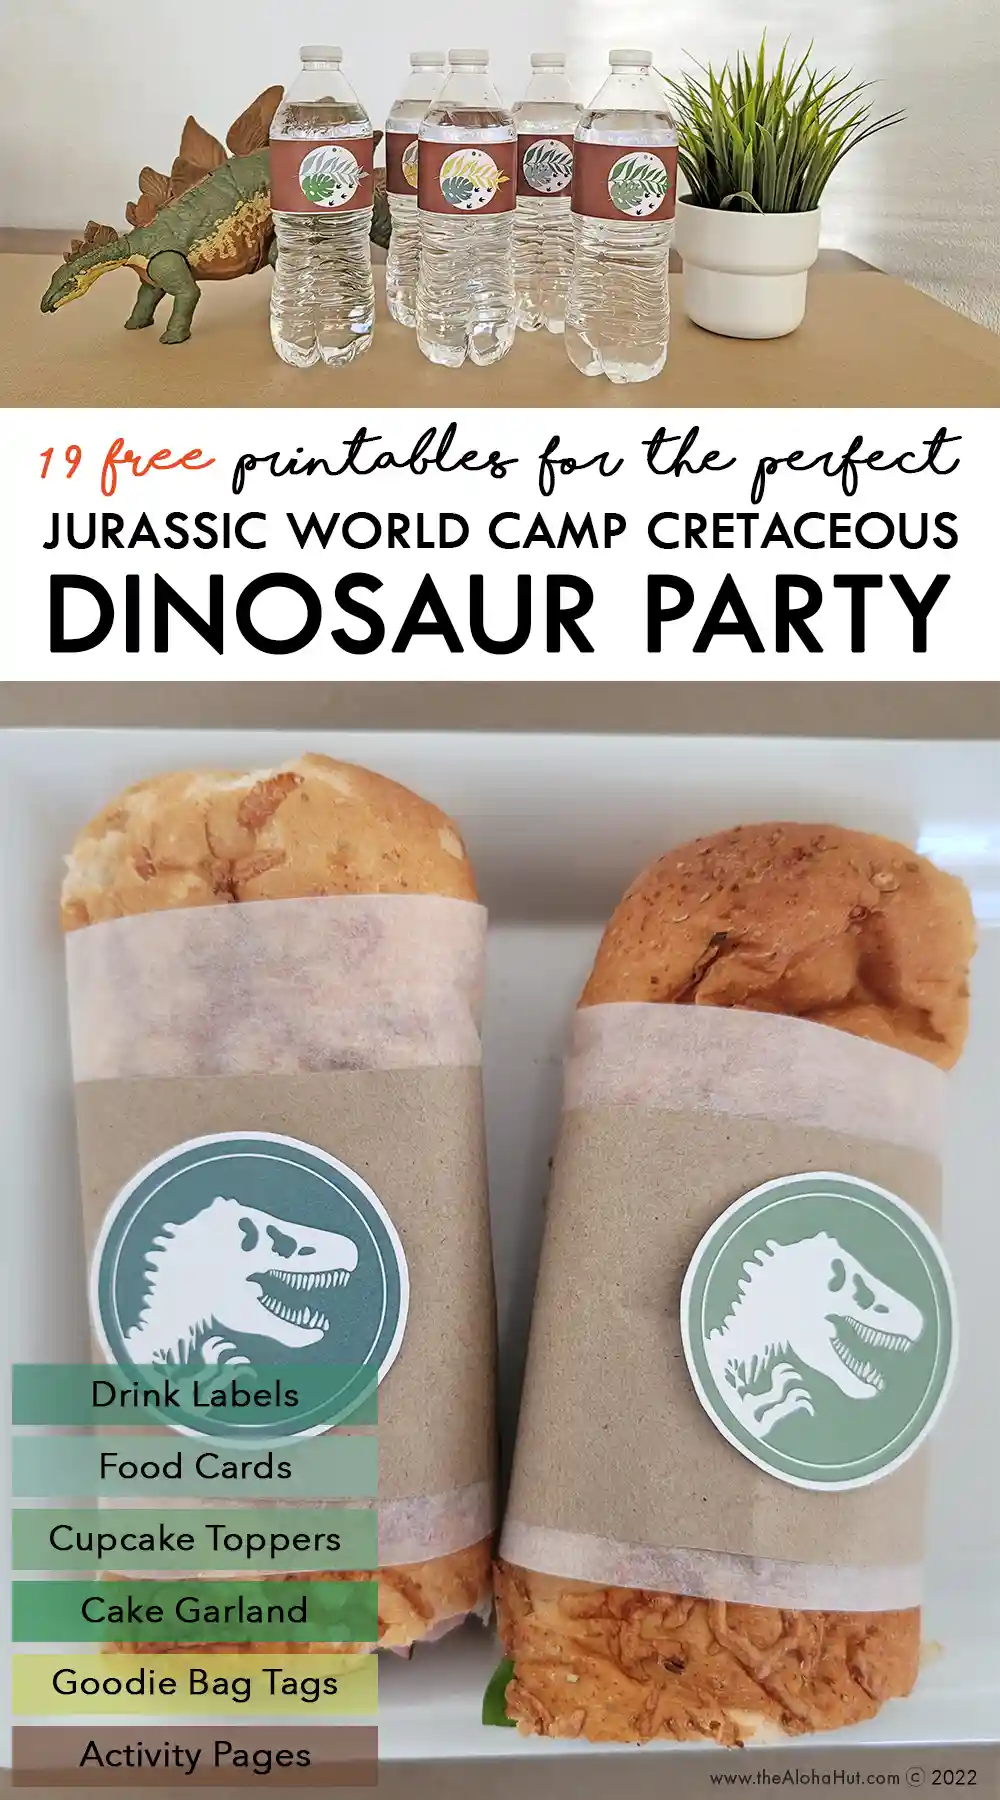 Jurassic World Camp Cretaceous Party Ideas - Dinosaur Party Ideas - free printable party decor & games